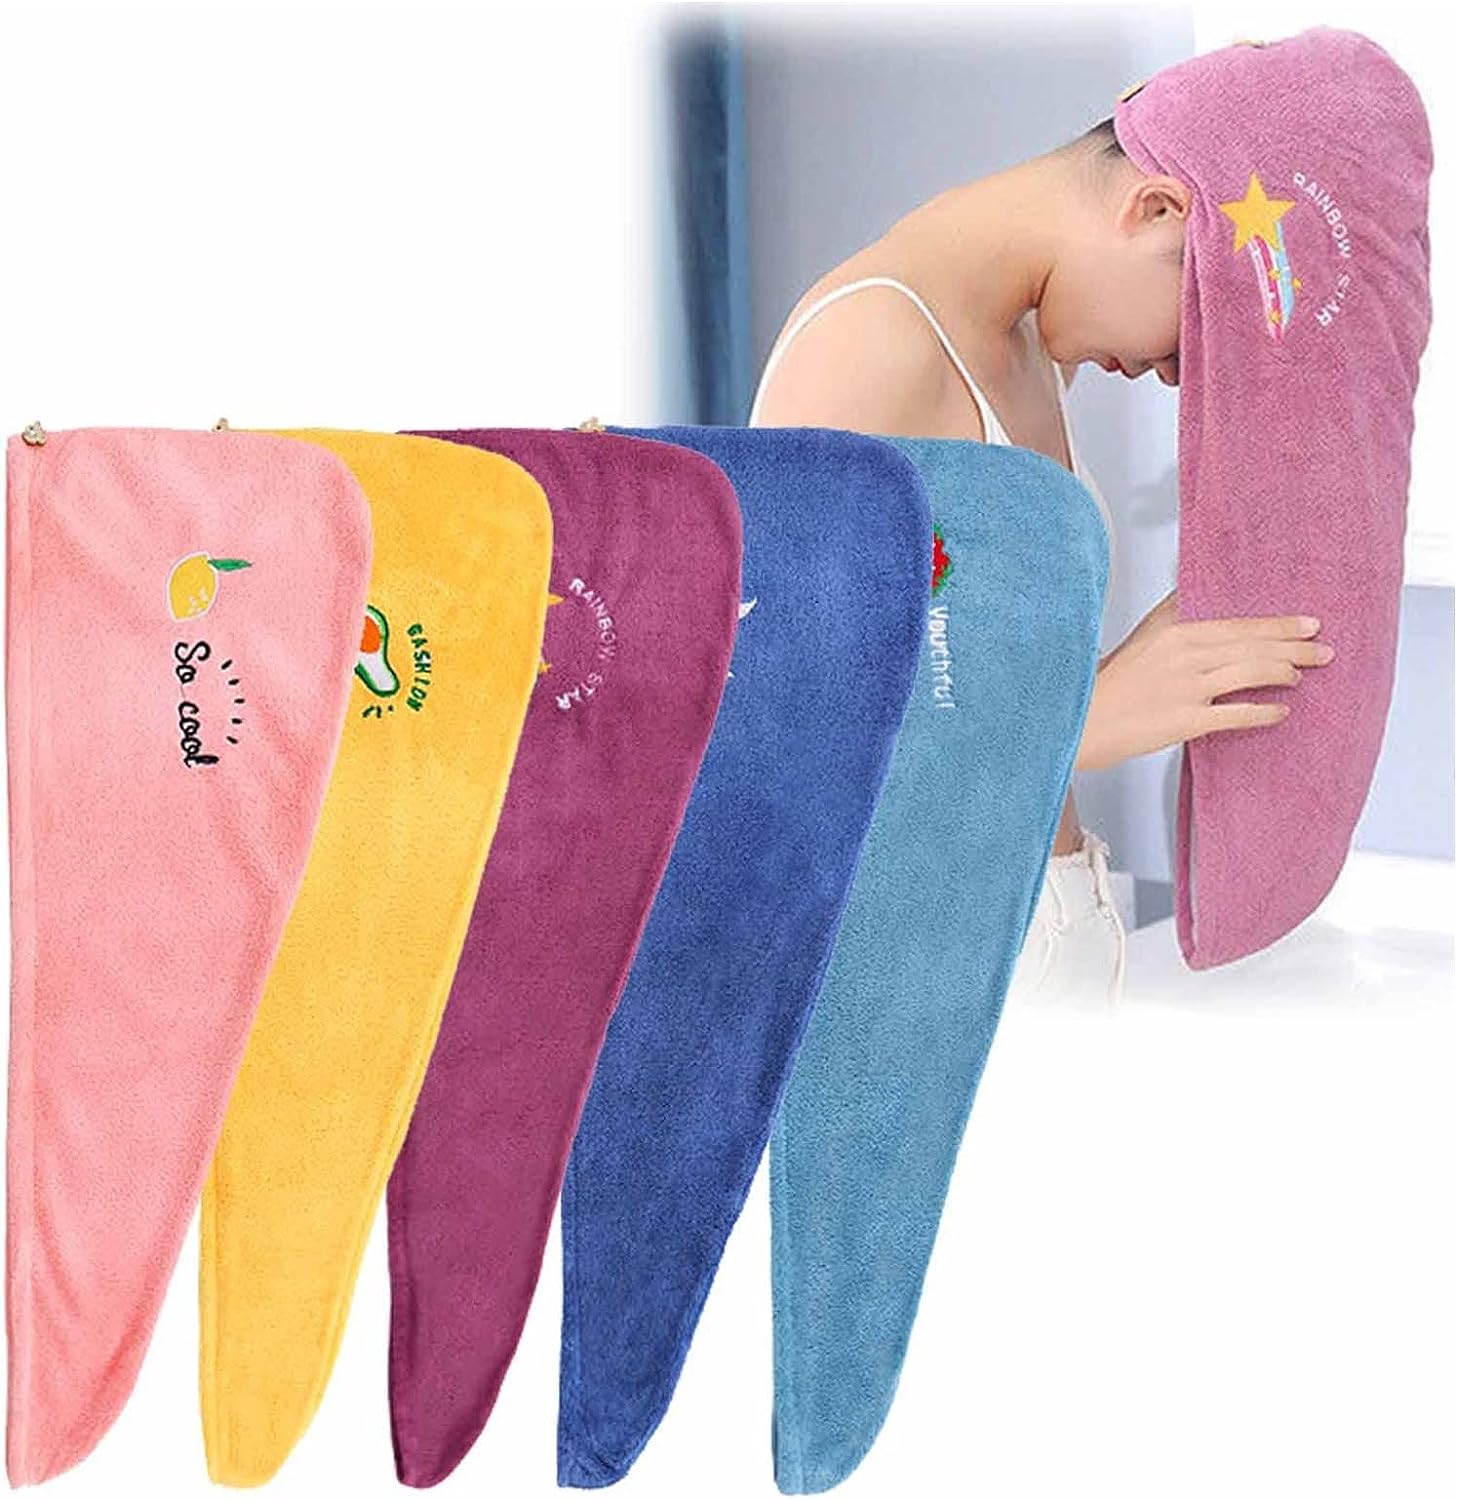 Multicolor Hair Wrap Towel - Home Essentials Store Retail